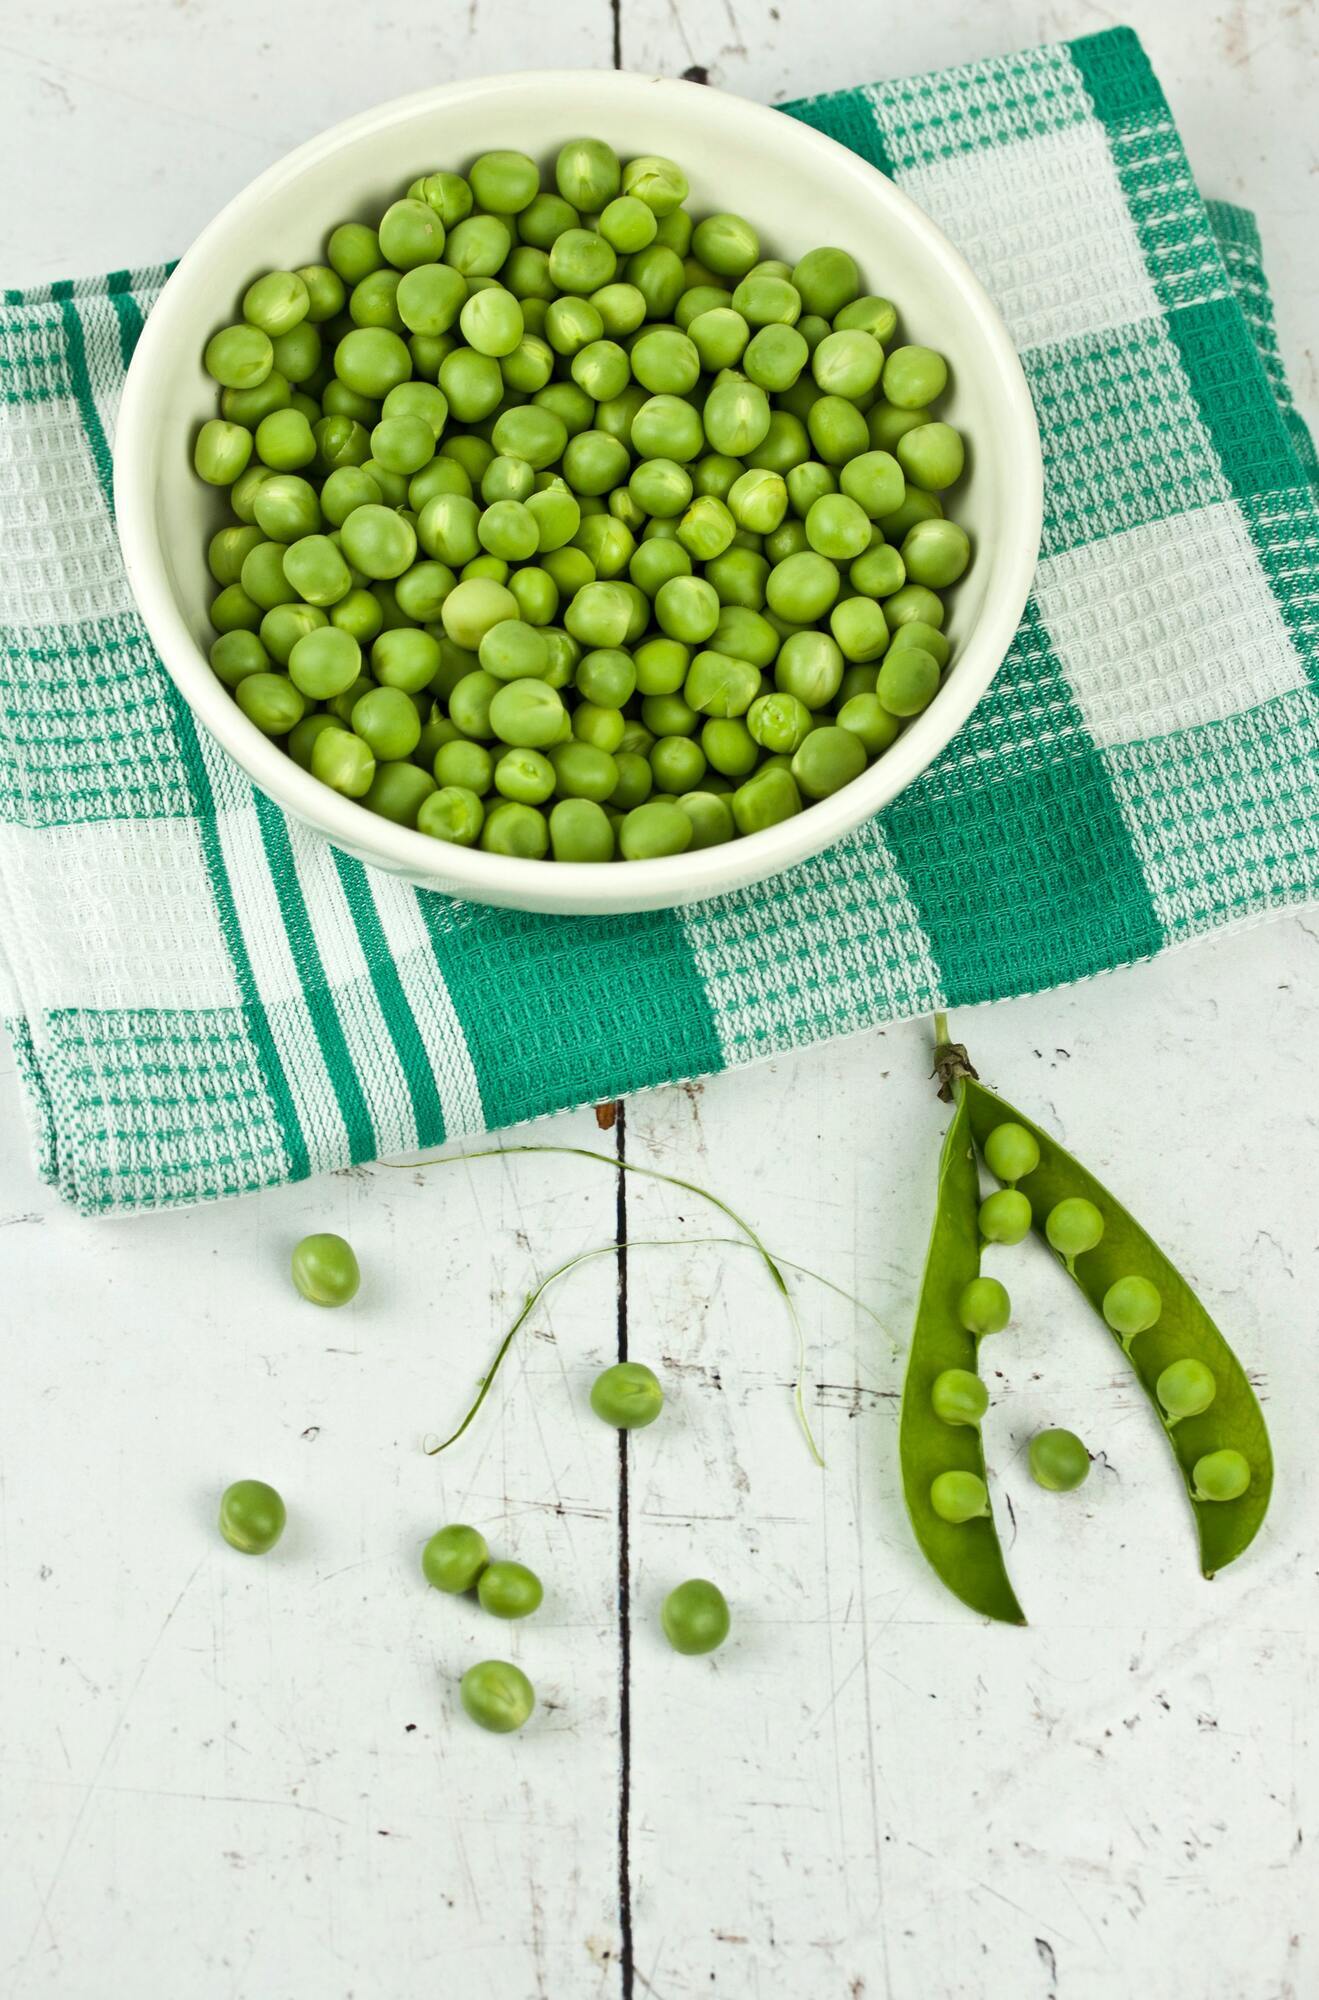 Peas for spreading